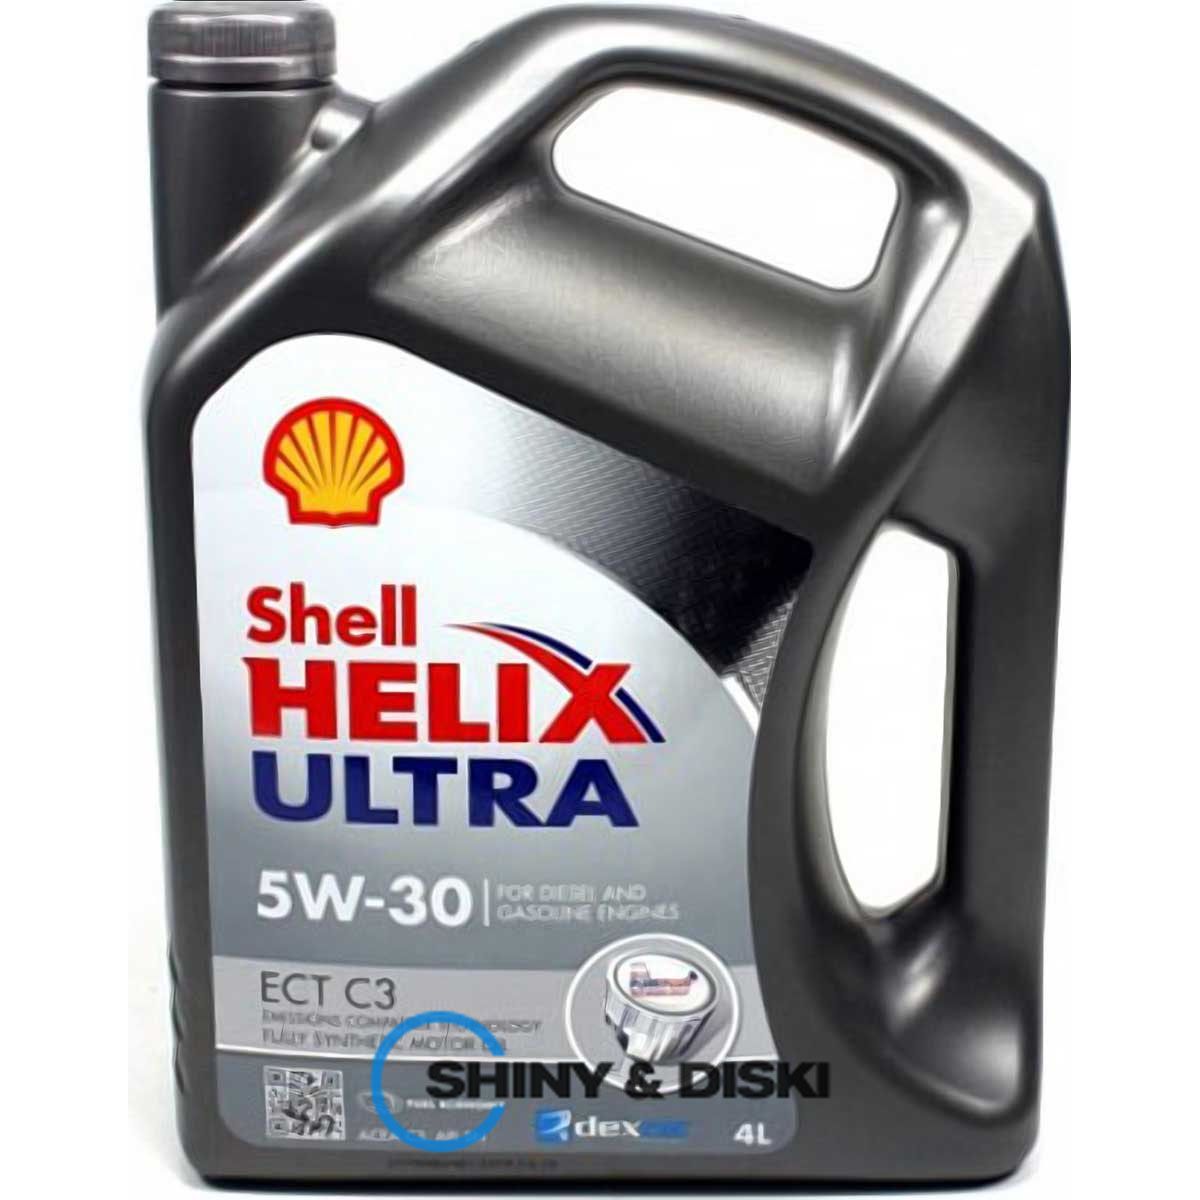 shell helix ultra ect c3 5w-30 (4л)